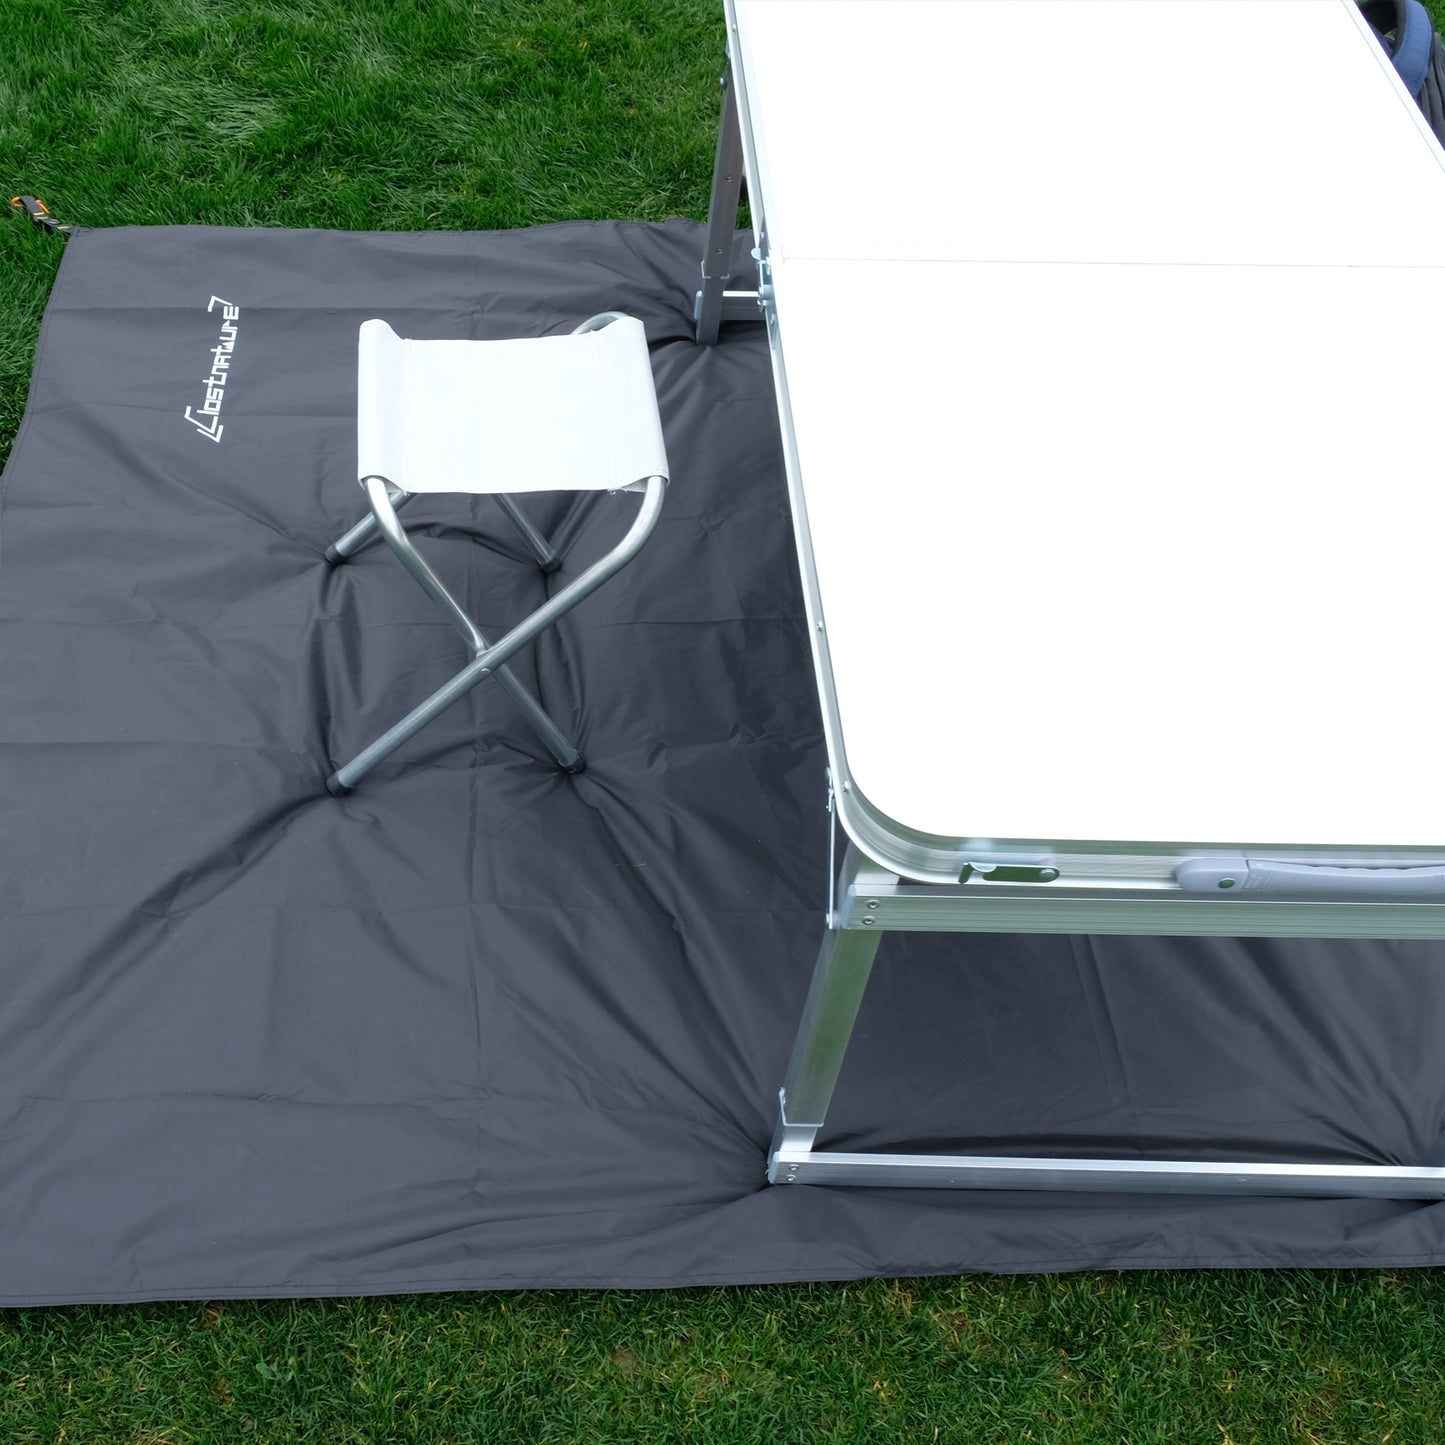 Clostnature 4-Person Tent Footprint - Waterproof Camping Tarp, Ultralight Ground Sheet Mat for Hiking, Backpacking, Hammock, Beach - Storage Bag Included